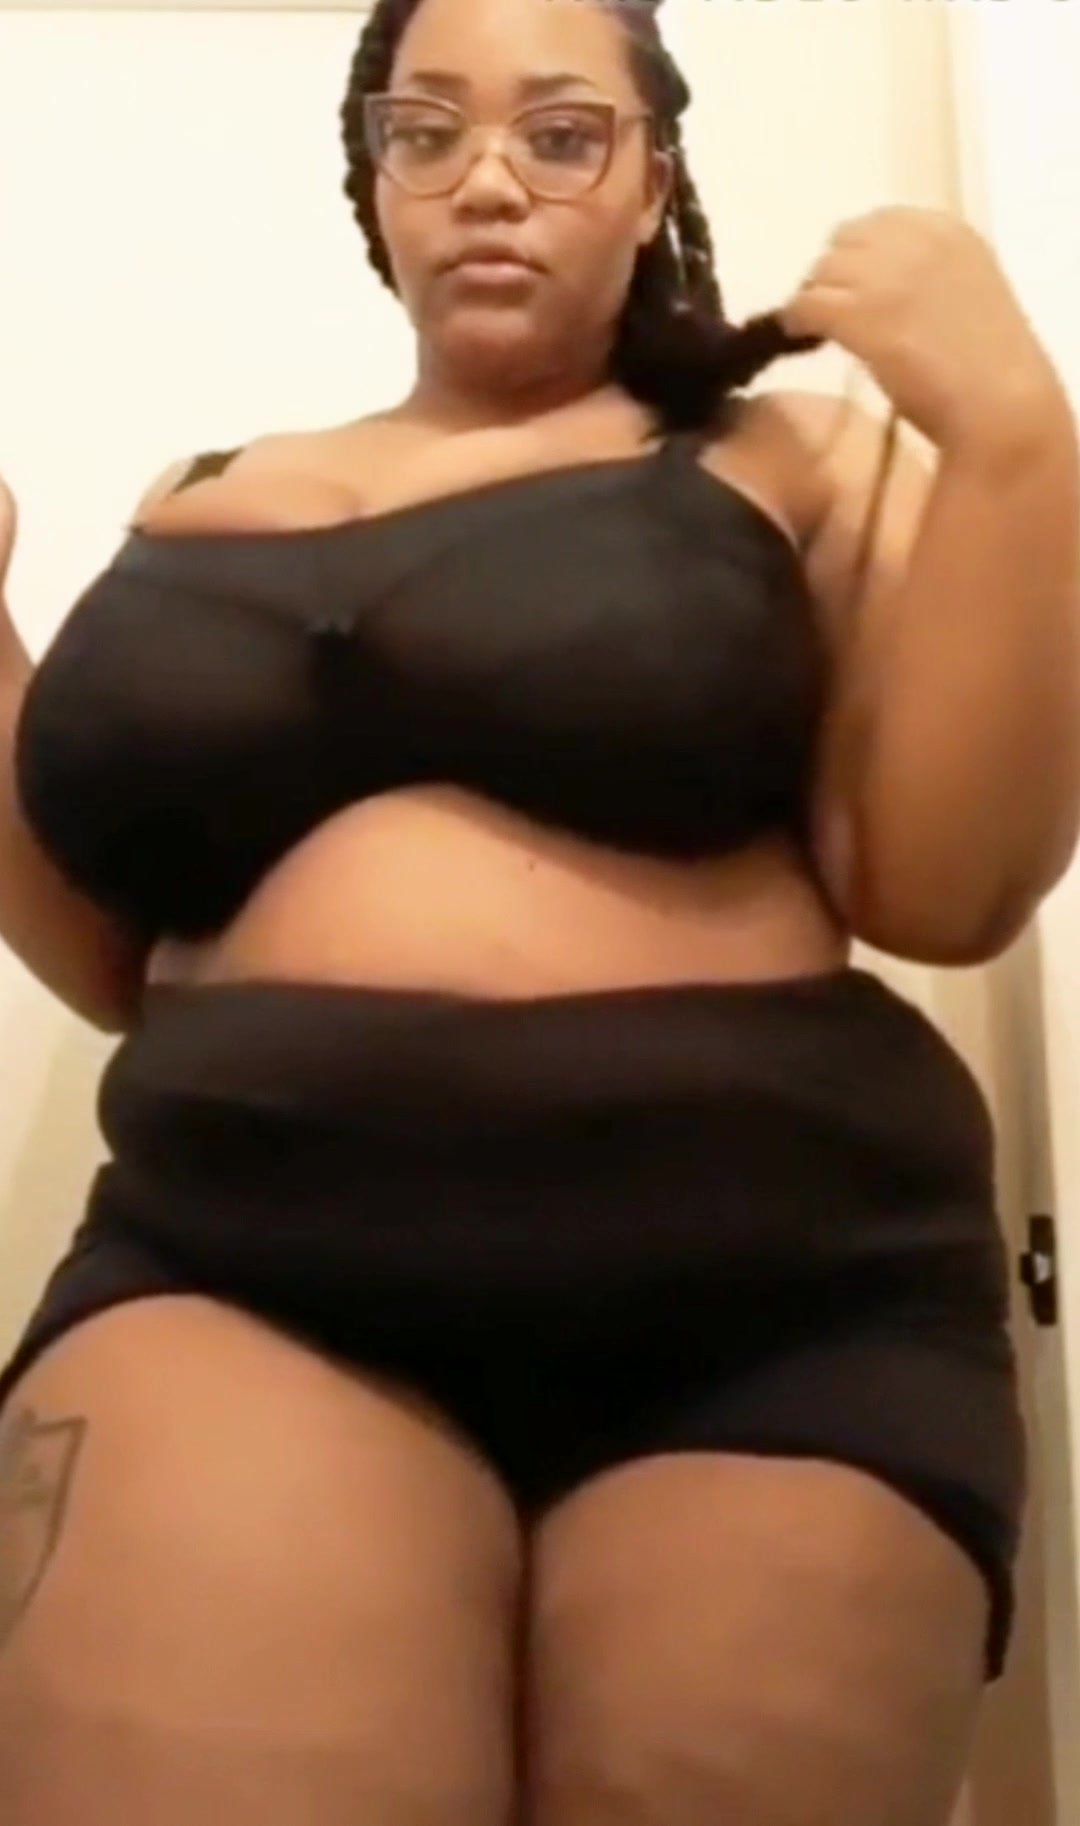 Ssbbw With Huge Areolas Tits - Boobs and Nipples: Big Brown Ebony Areolas - ThisVid.com